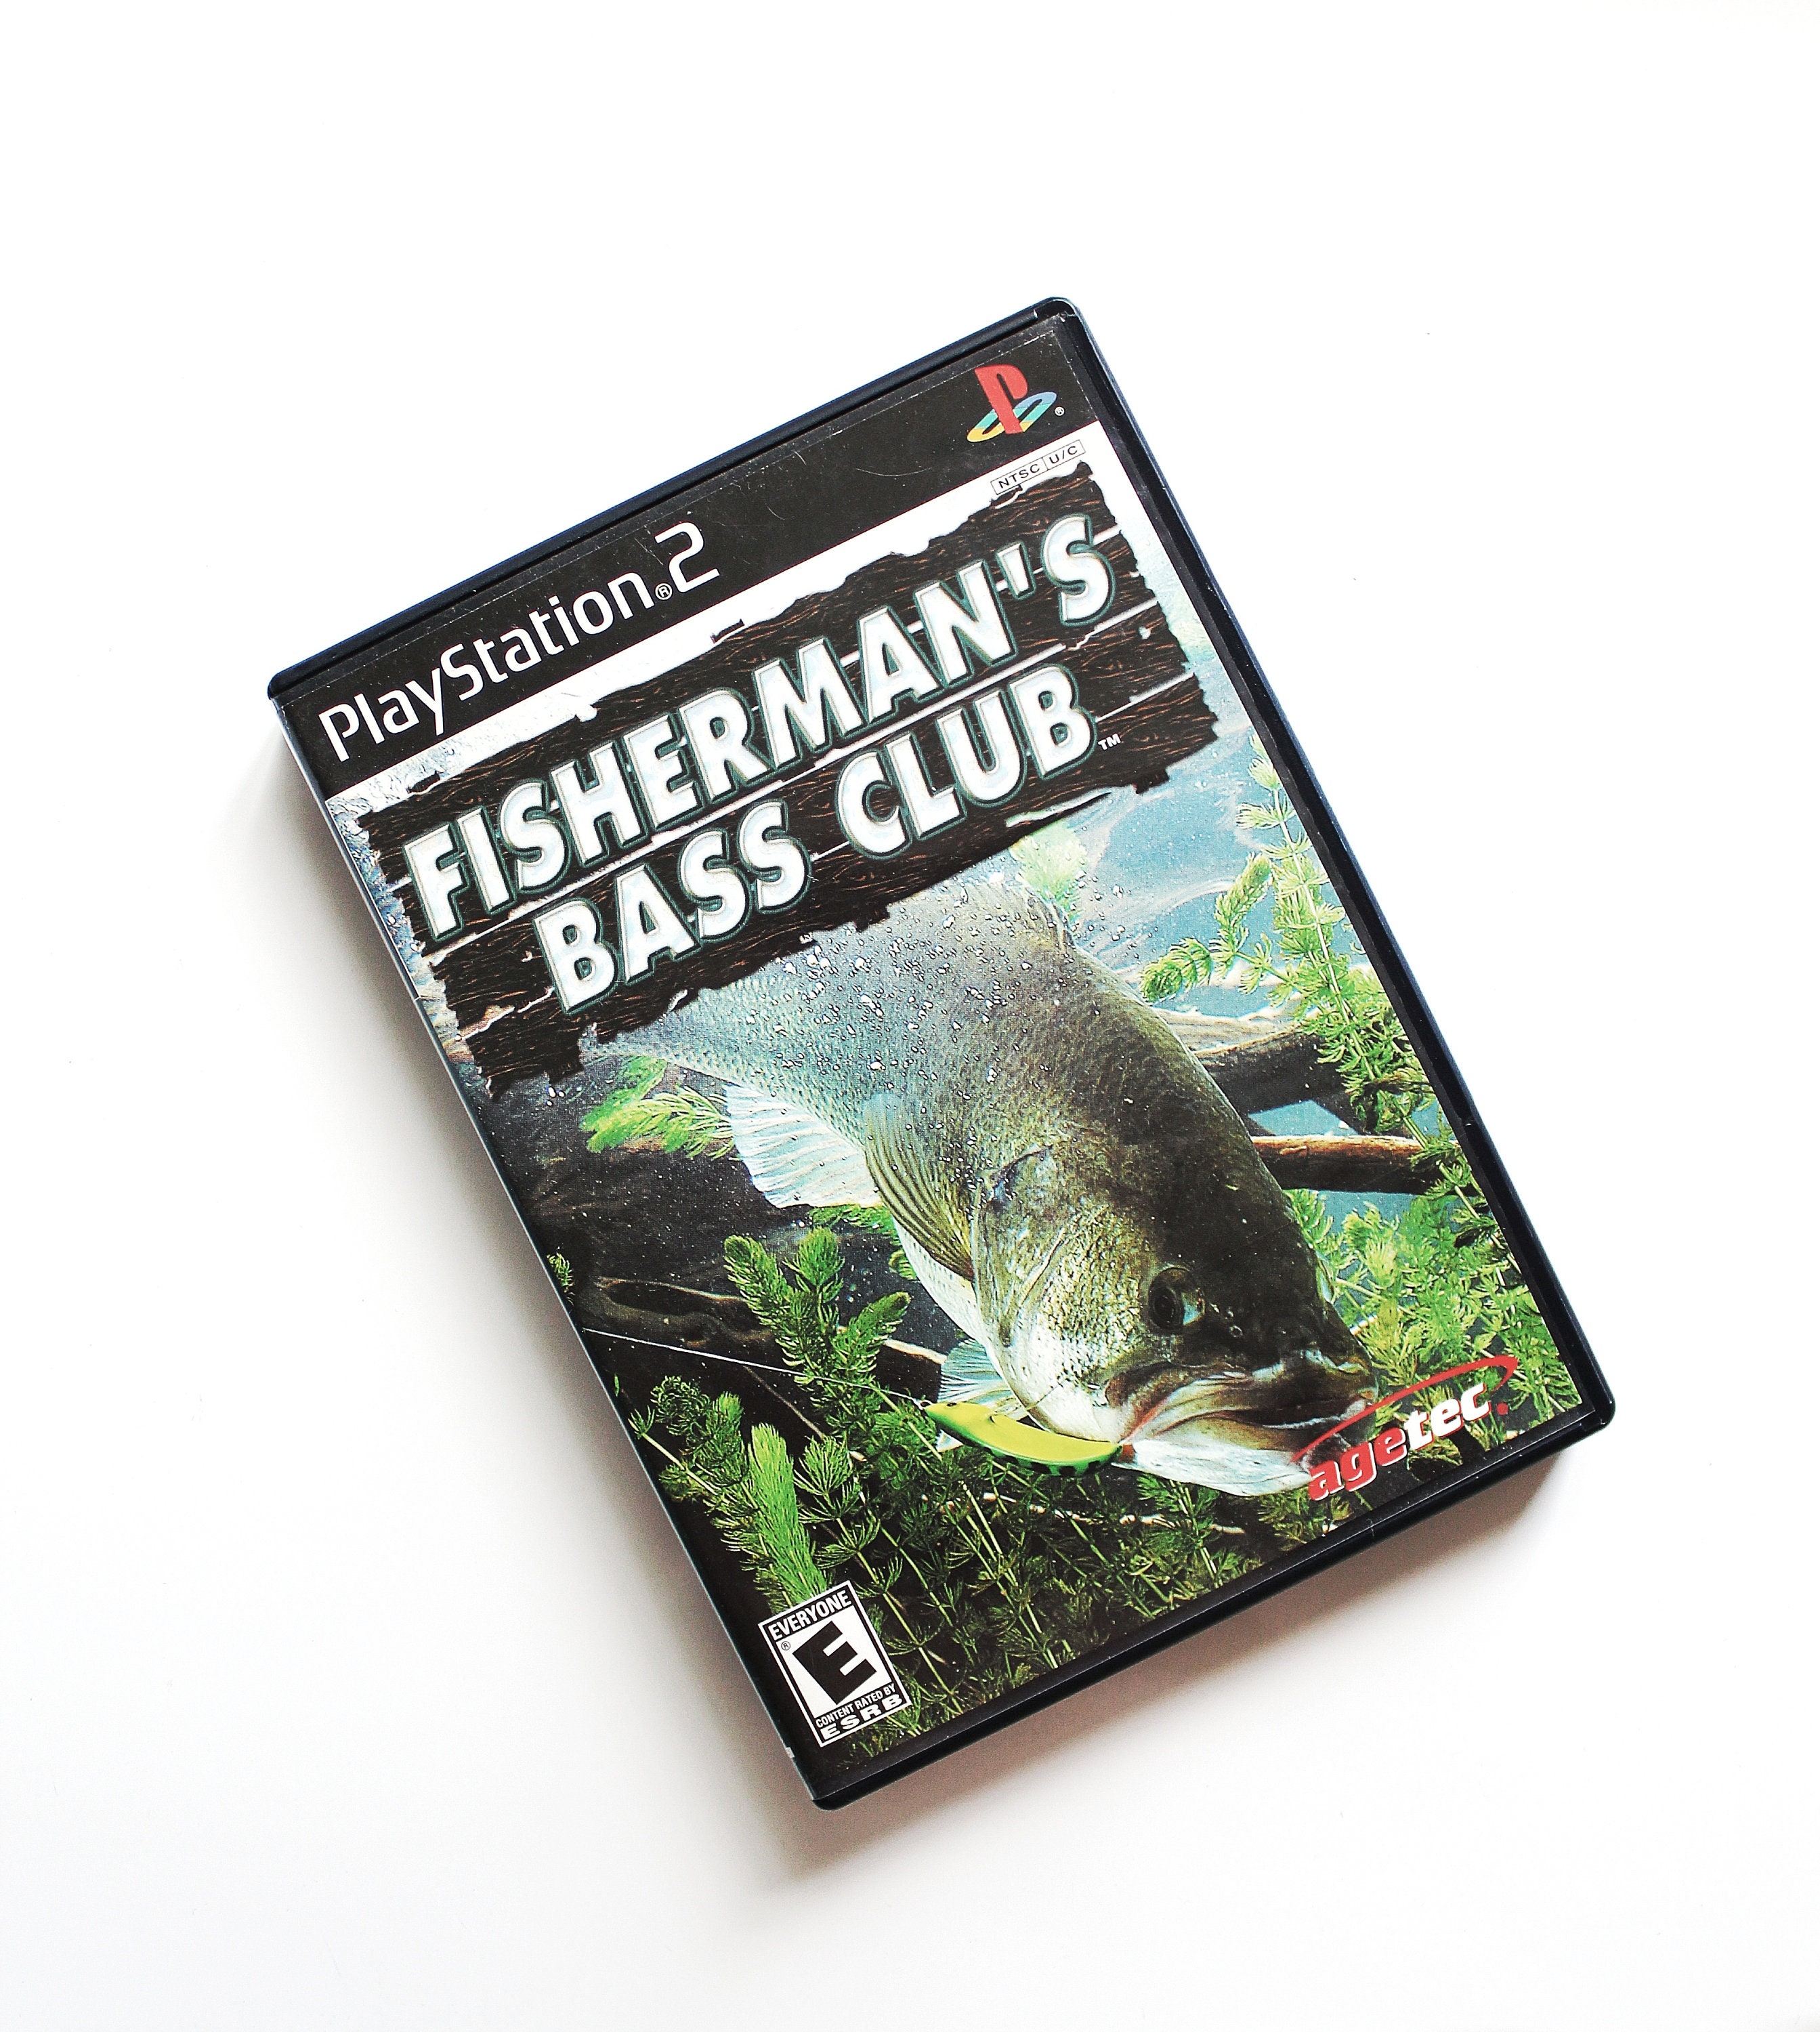 Fishermans Bass Club (Playstation 2)